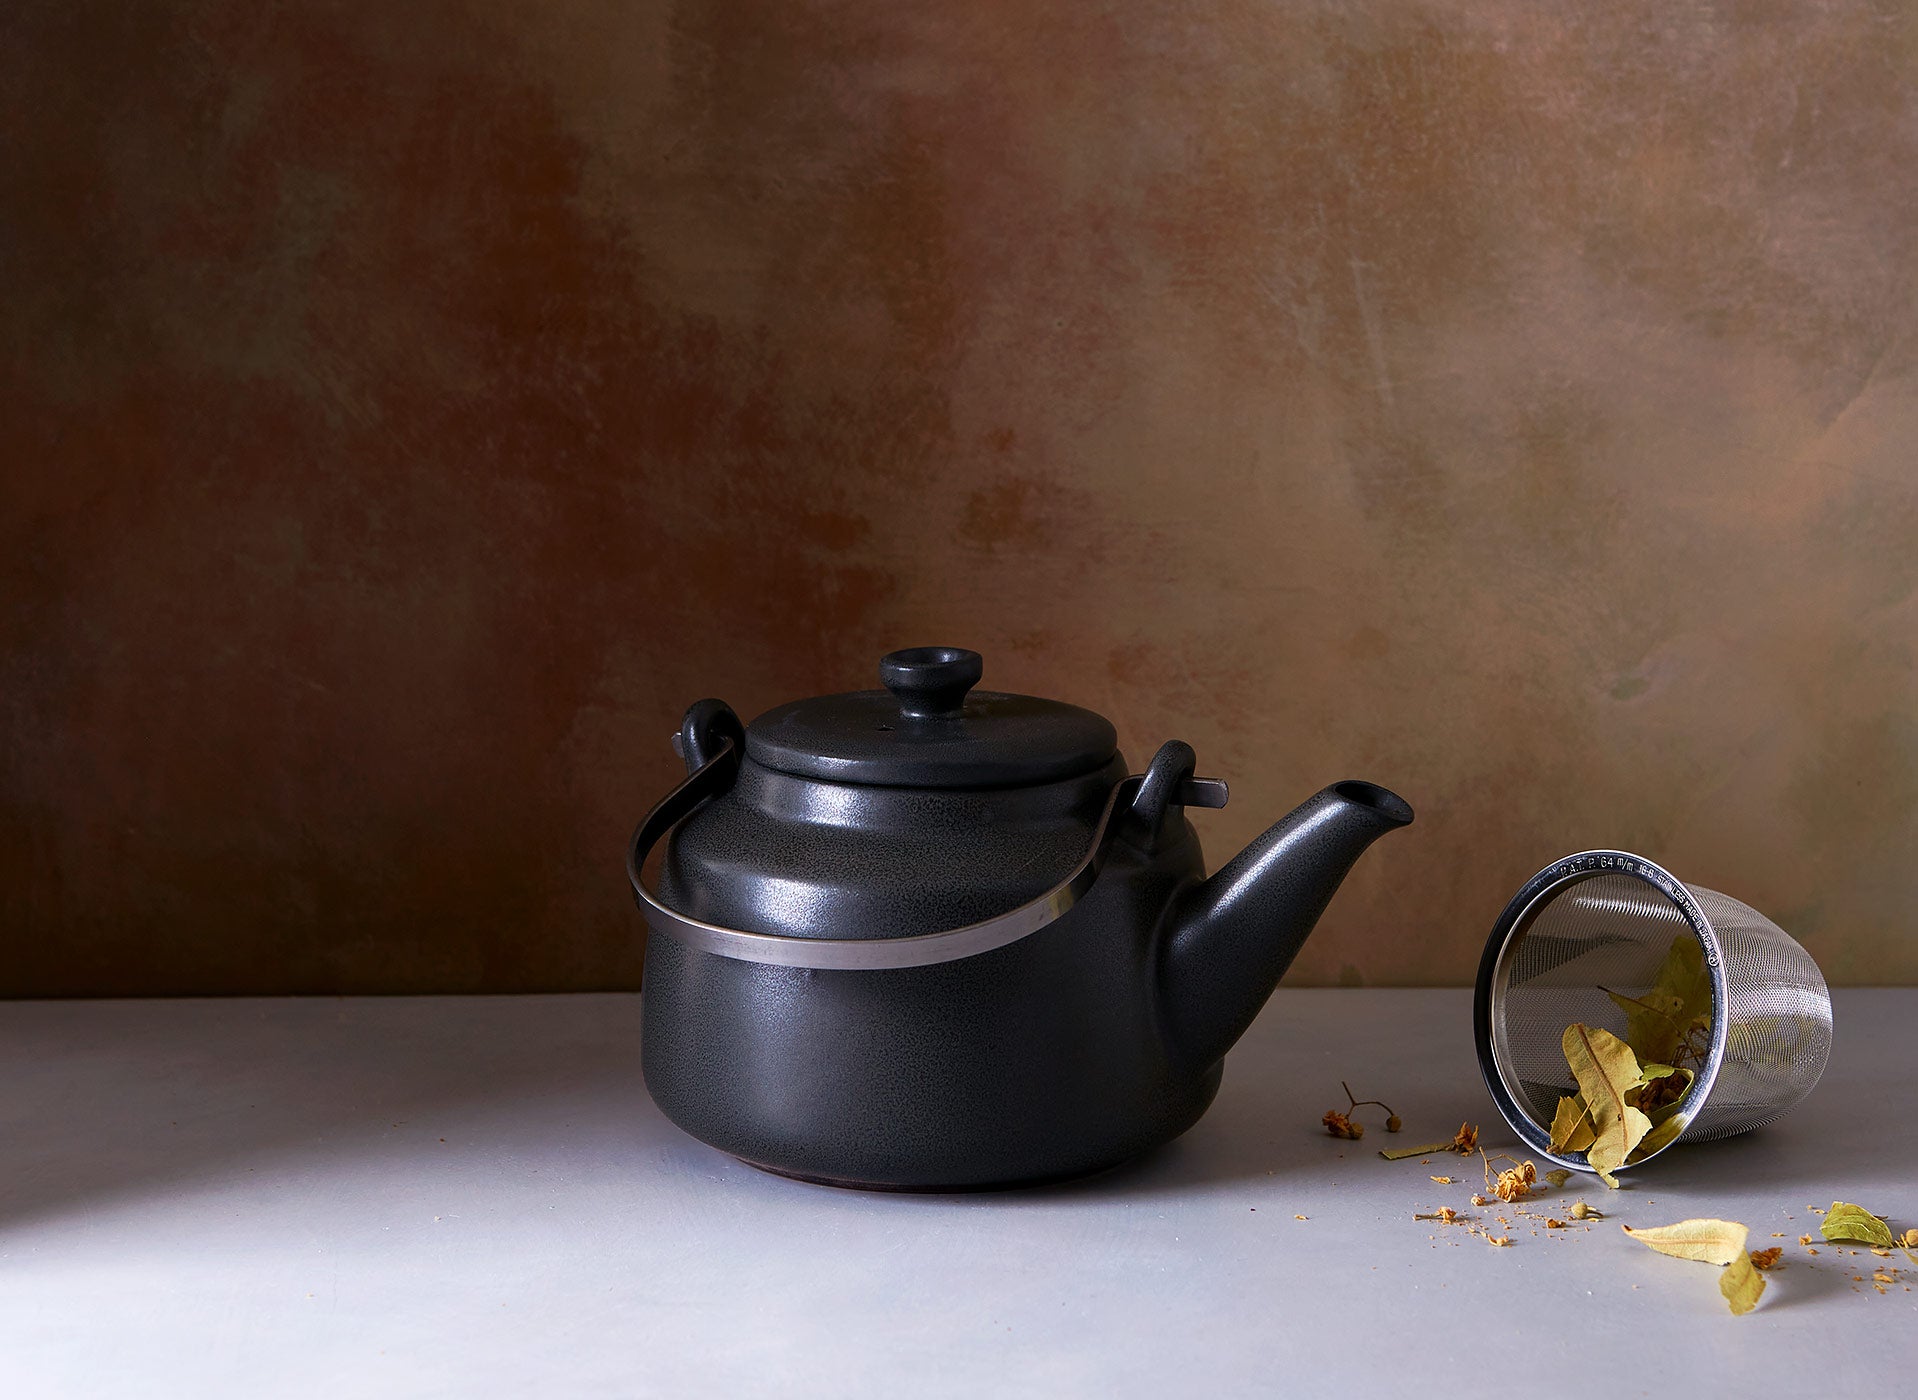 Mini Tea Pot, Cast Iron Tea Kettle Mini Tea Pot With Stainless